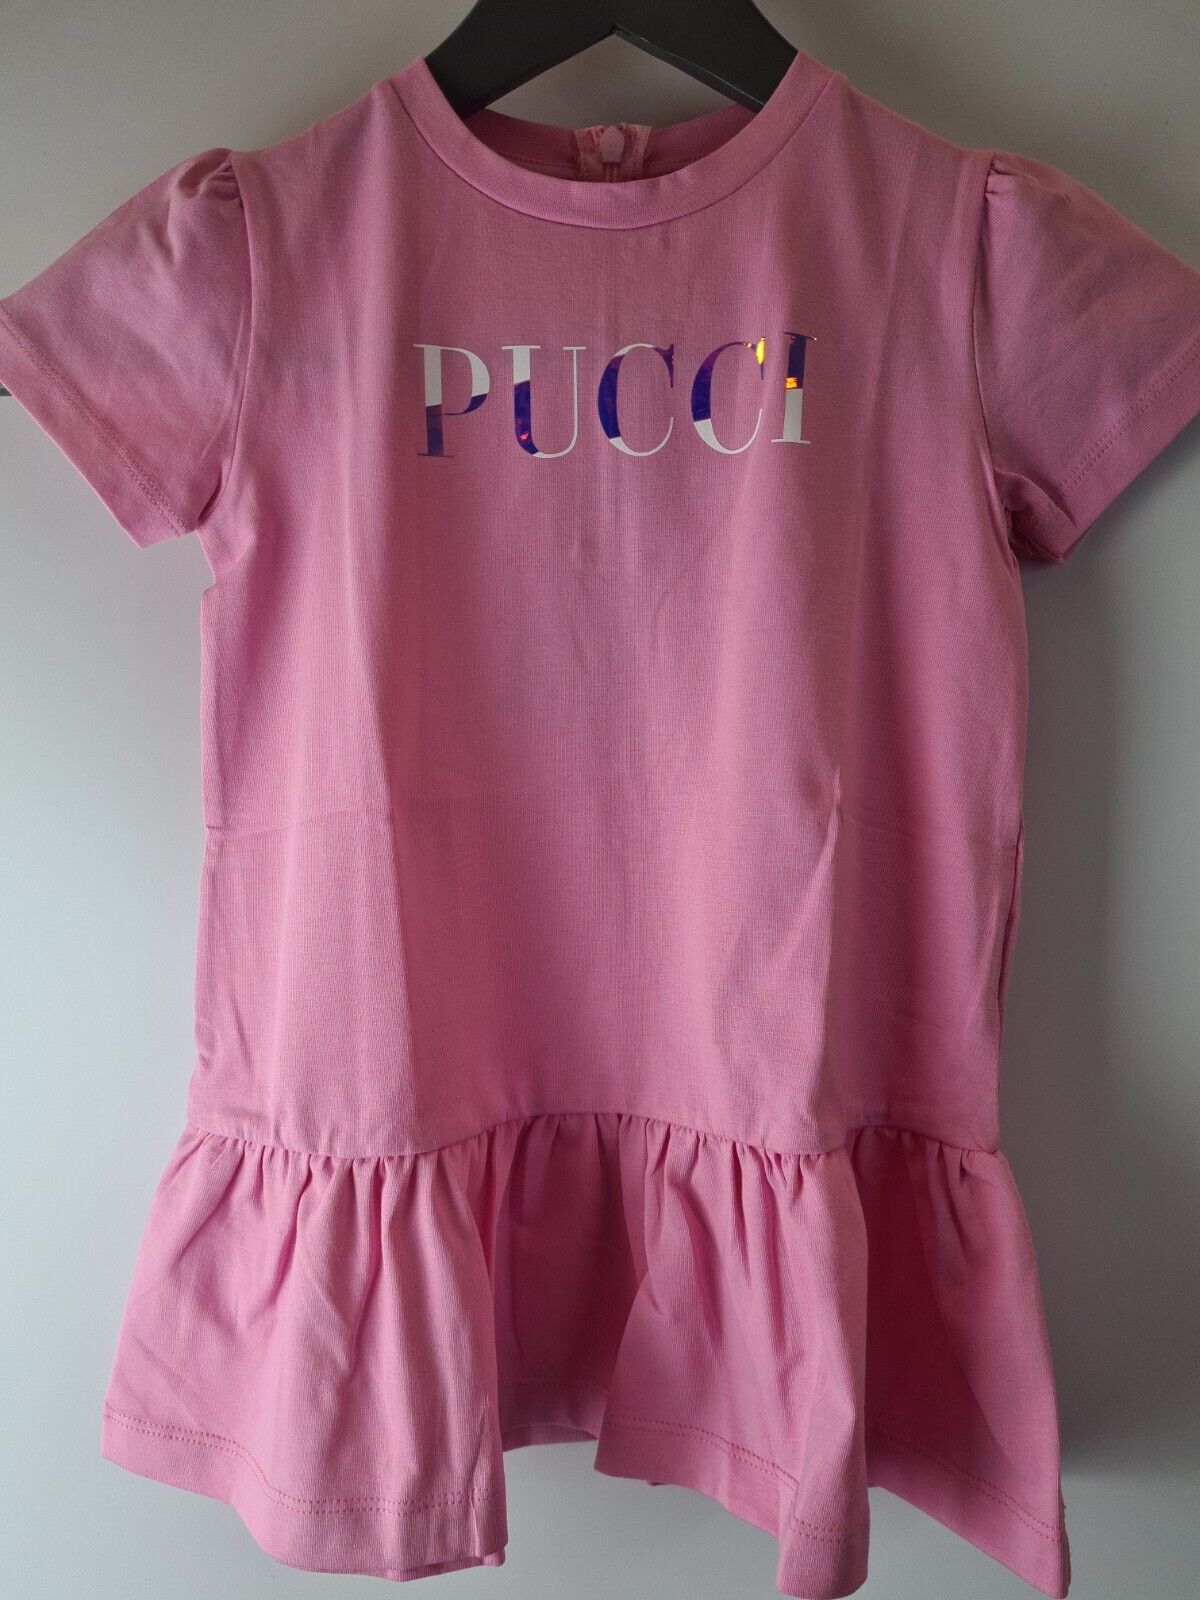 Emilio Pucci Baby Girls Pink Cotton Logo Dress Size 3 Months **** V219